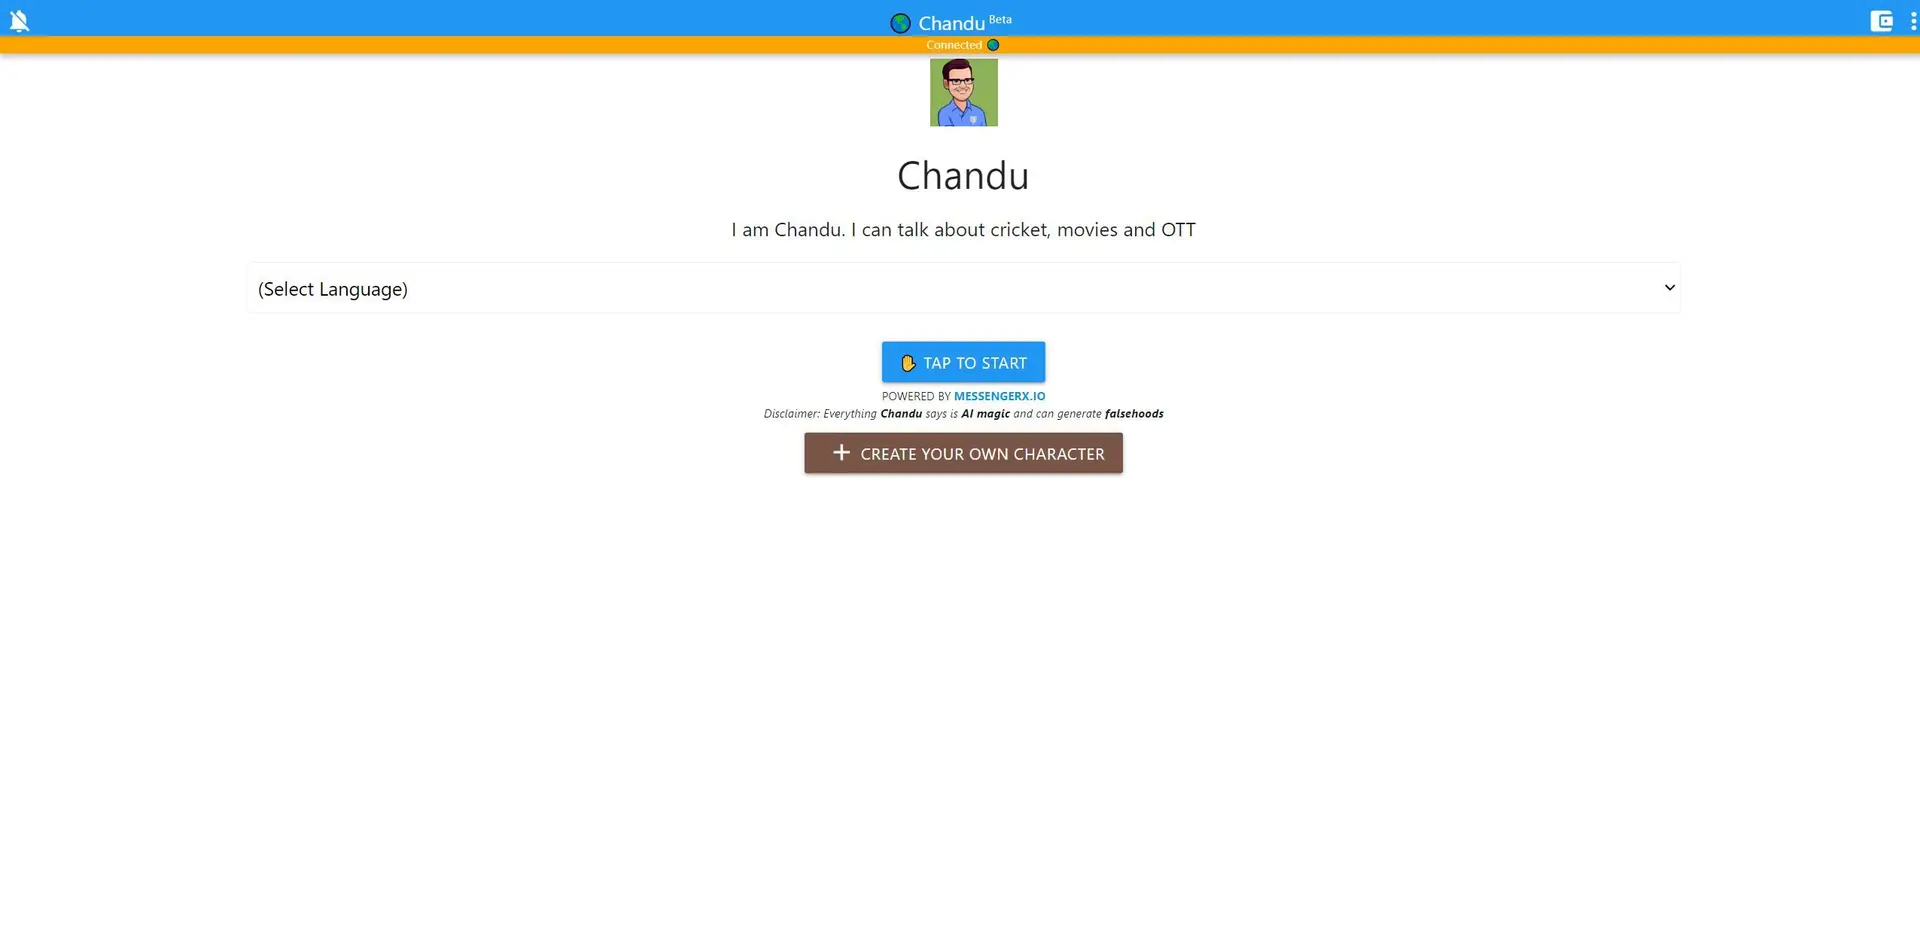 Chanduwebsite picture